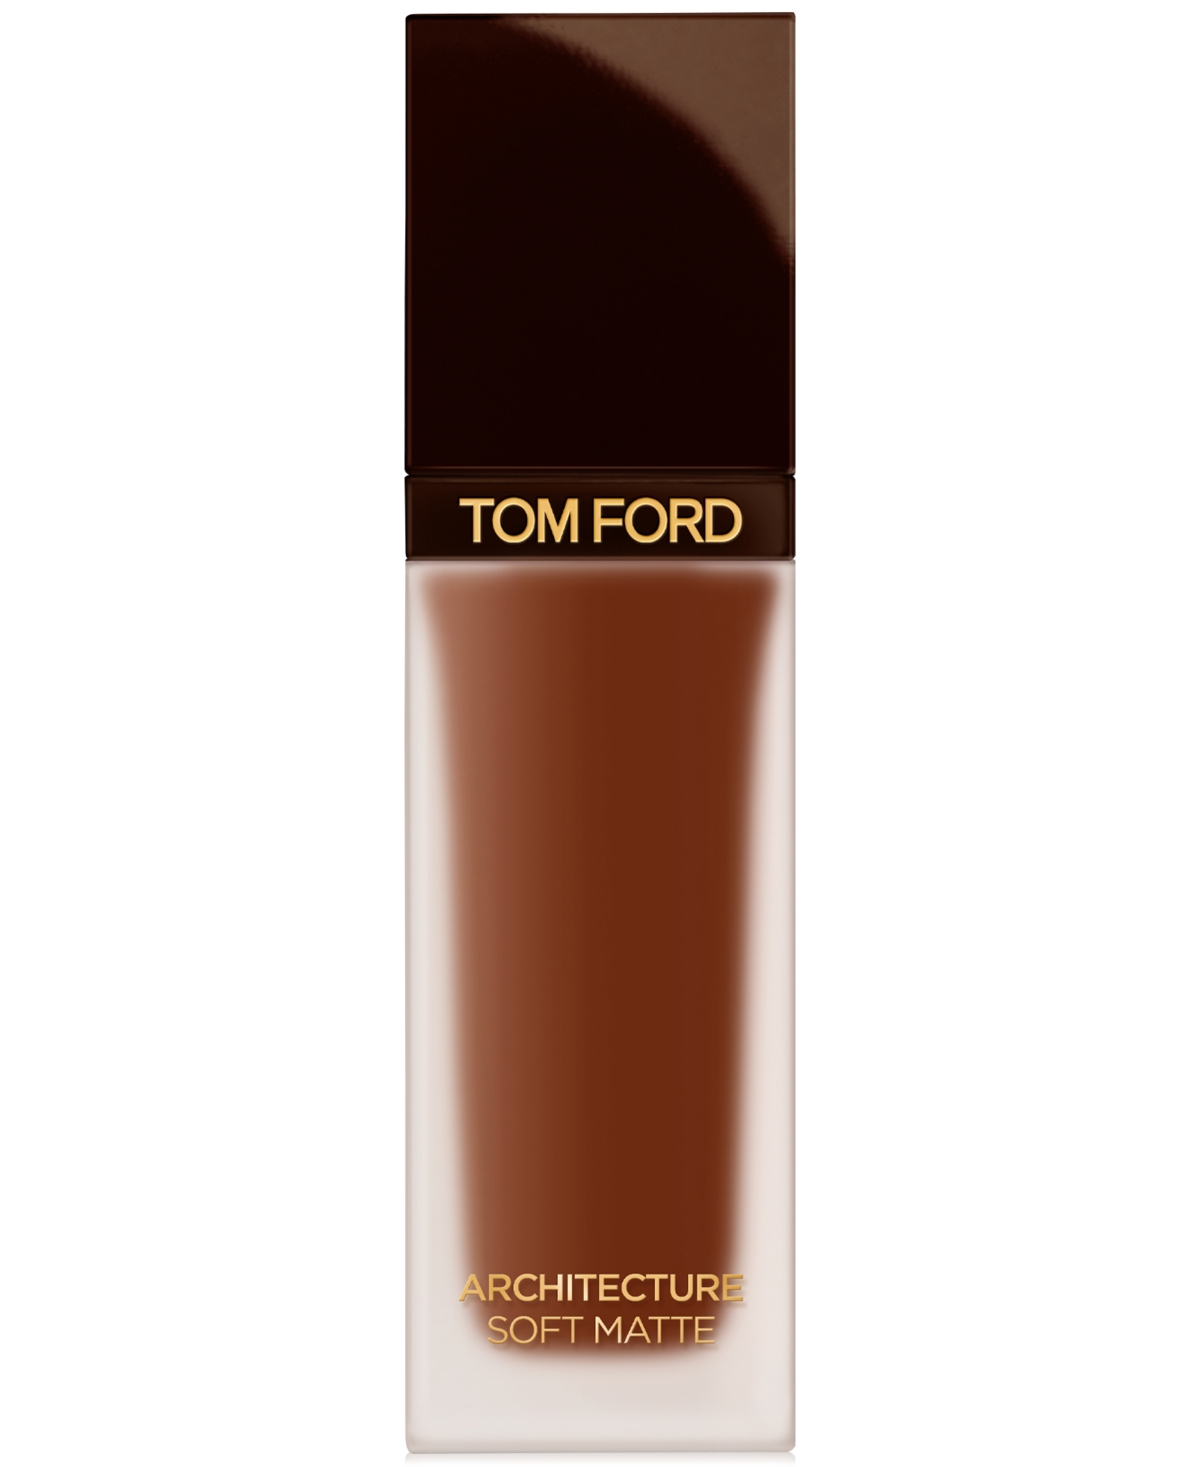 Tom Ford Architecture Soft Matte Blurring Foundation In . Walnut - Deep-rich